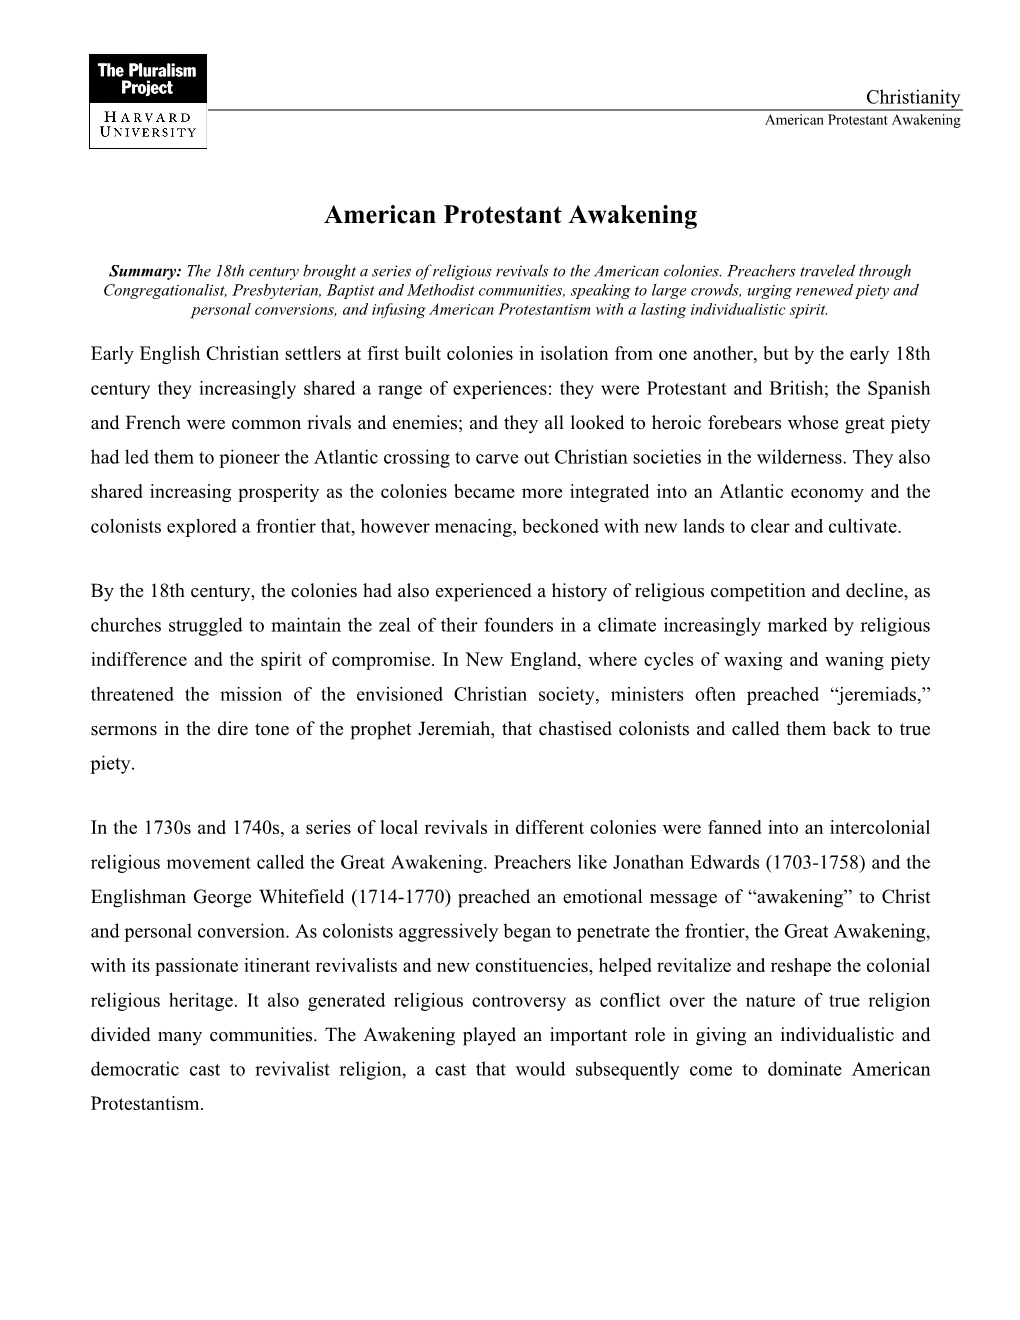 American Protestant Awakening